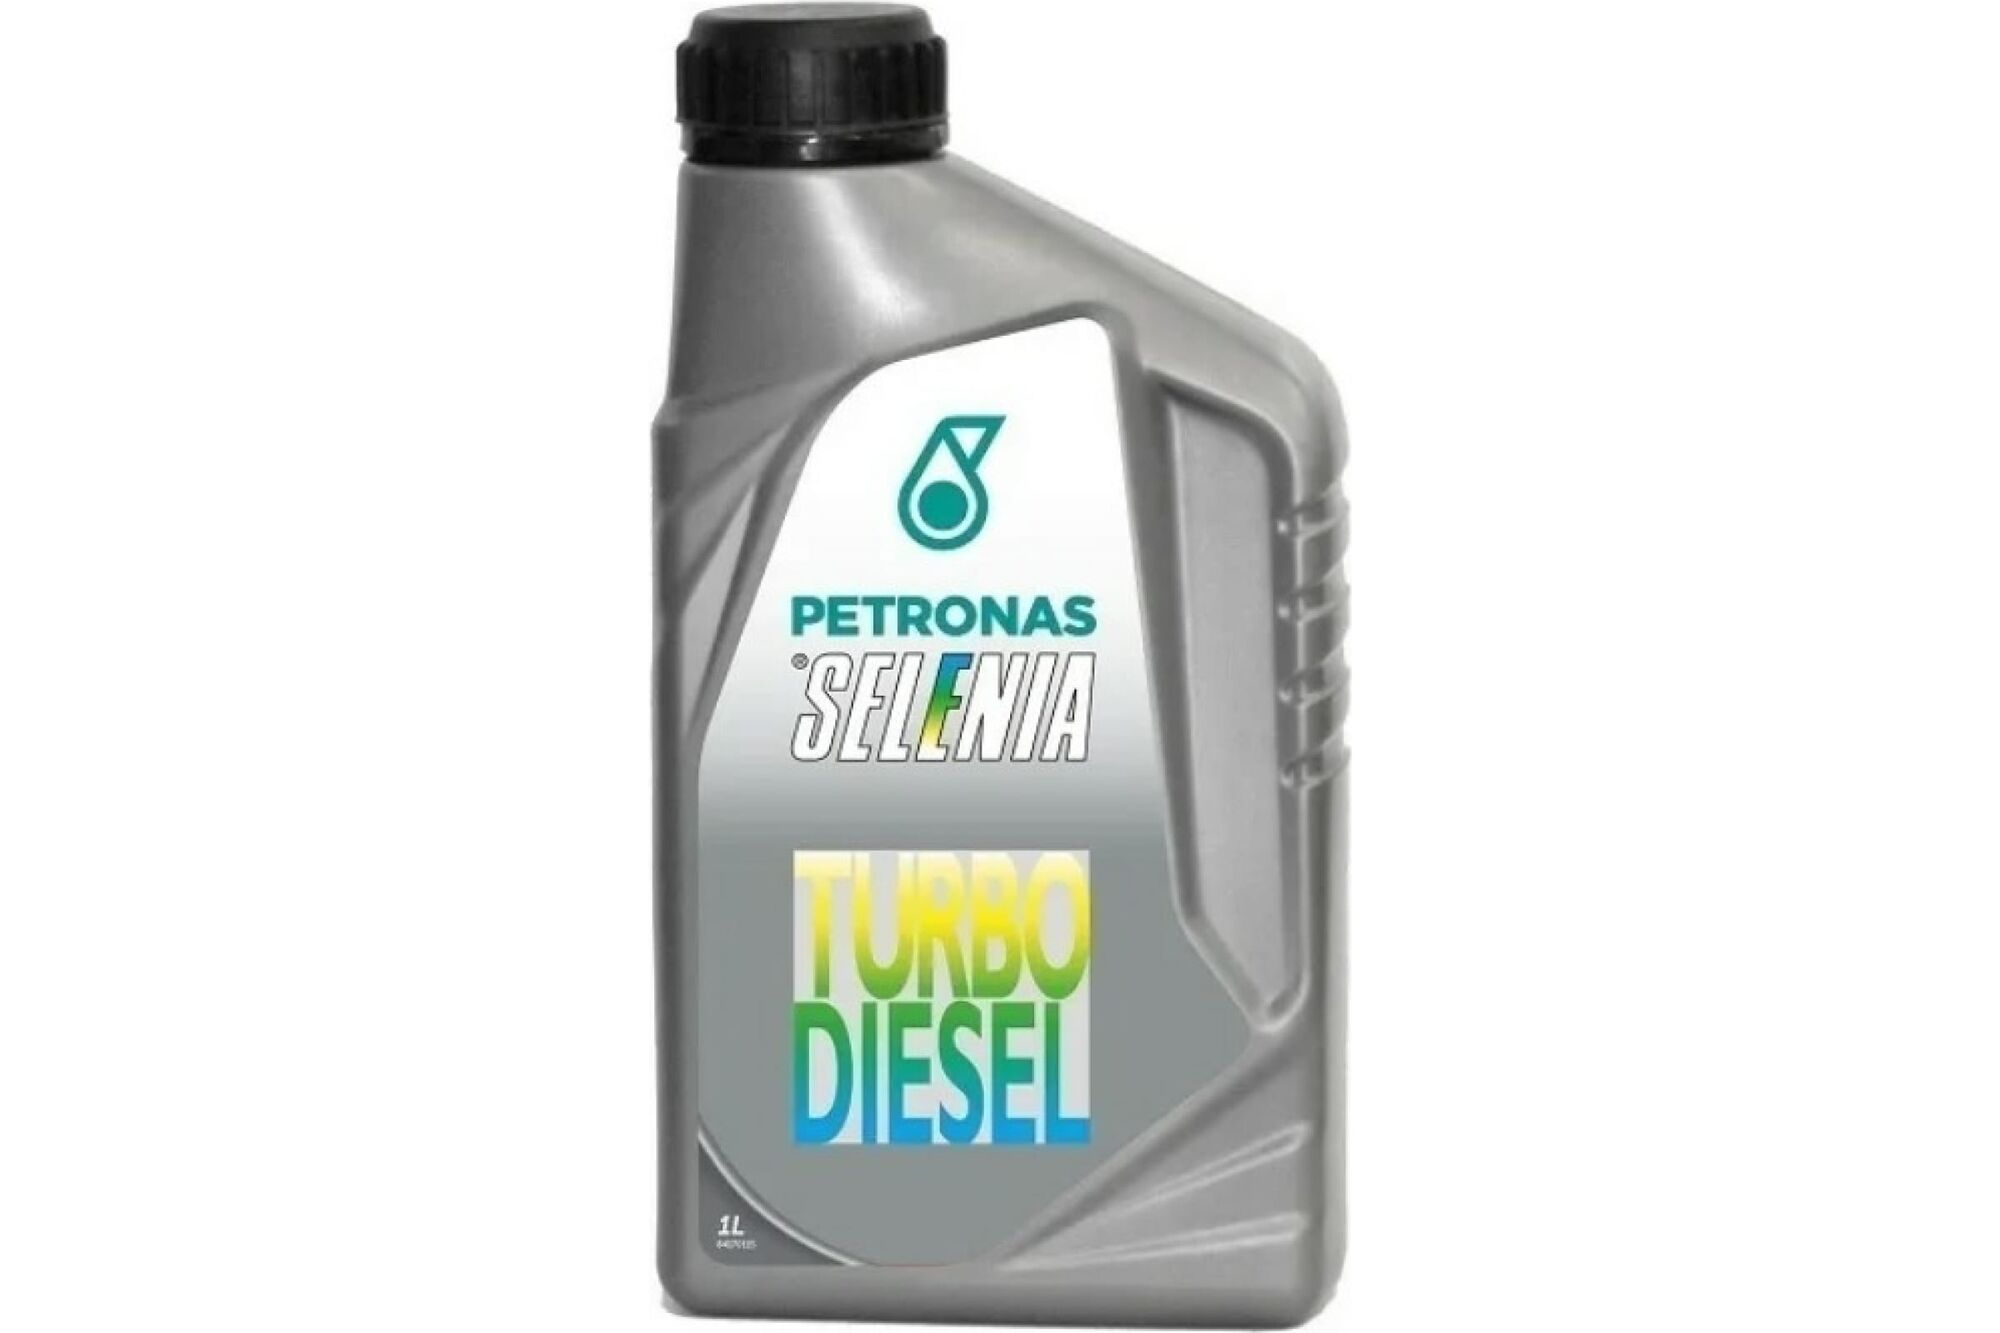 Моторное масло PETRONAS SELENIA TURBO DIESEL полусинтетическое, 10W40, 1 л 70566E18EU